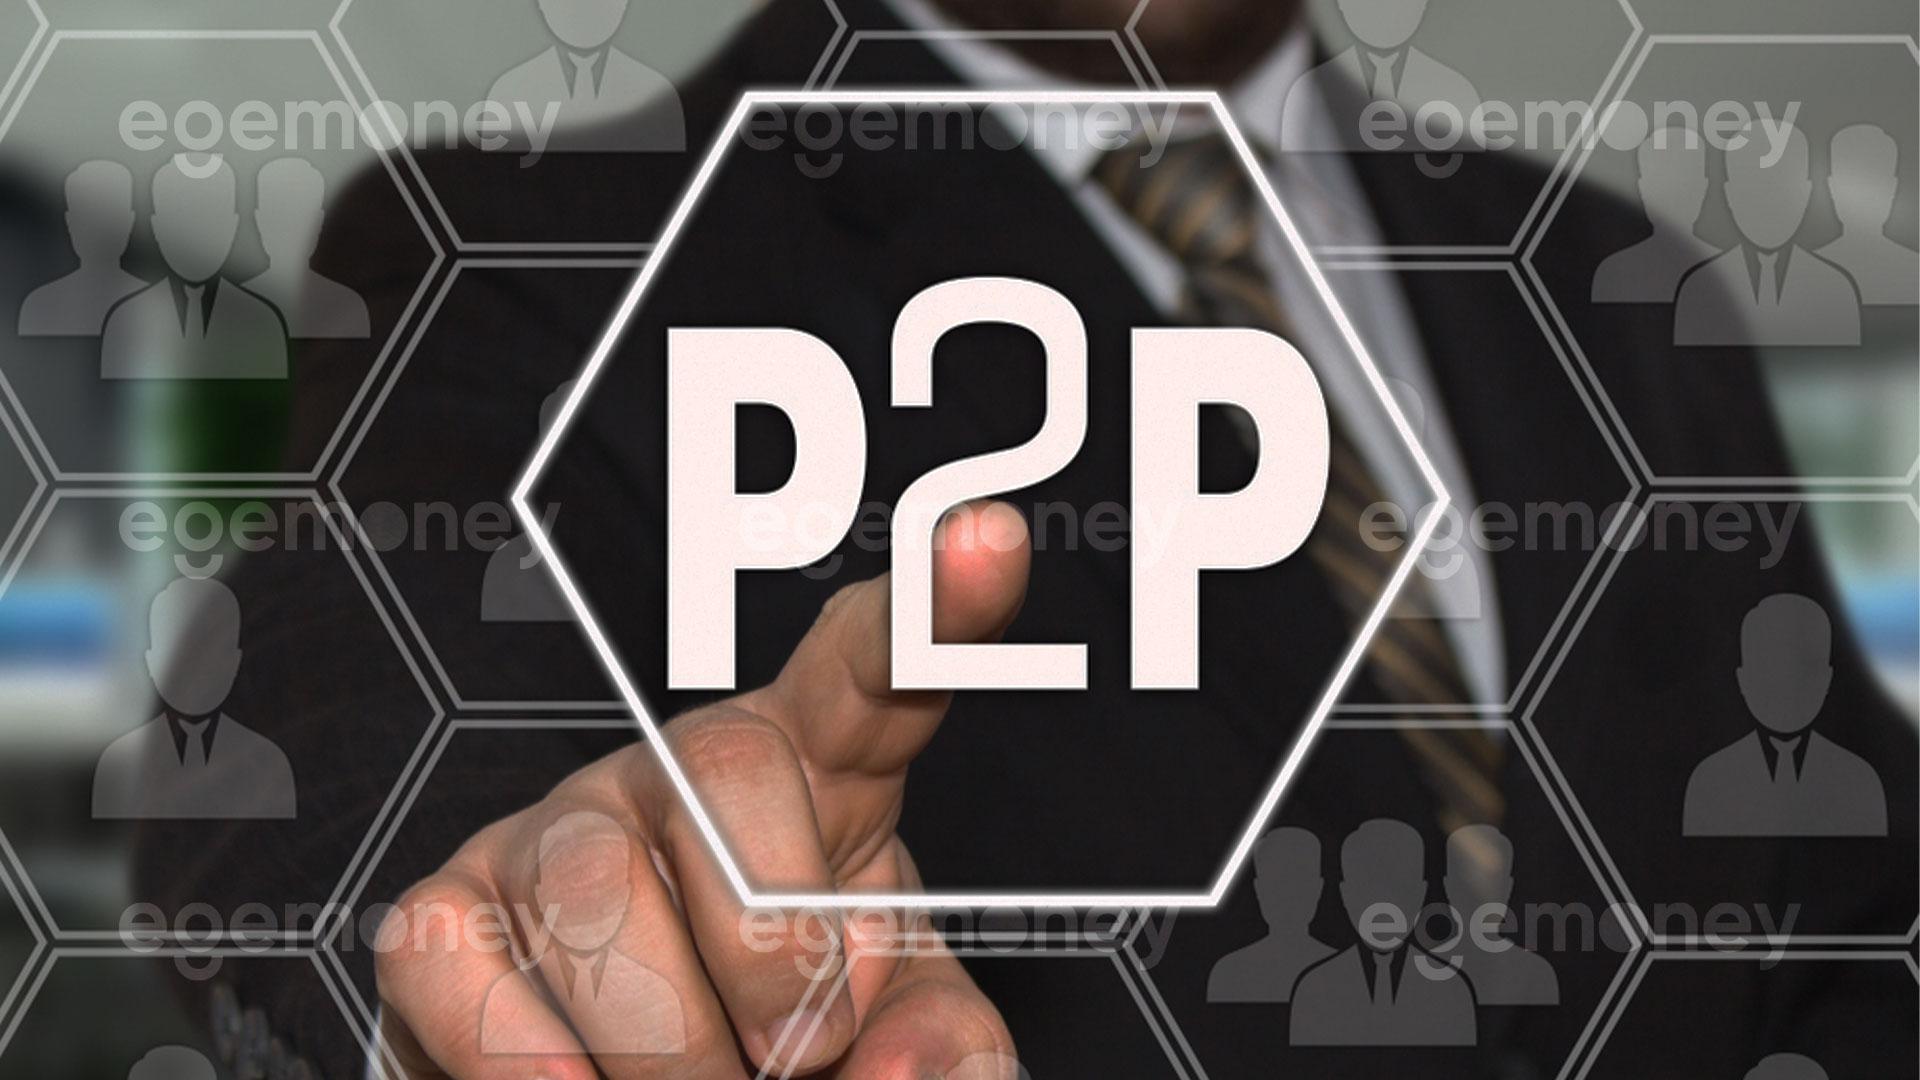 What is EgeMoney P2P?